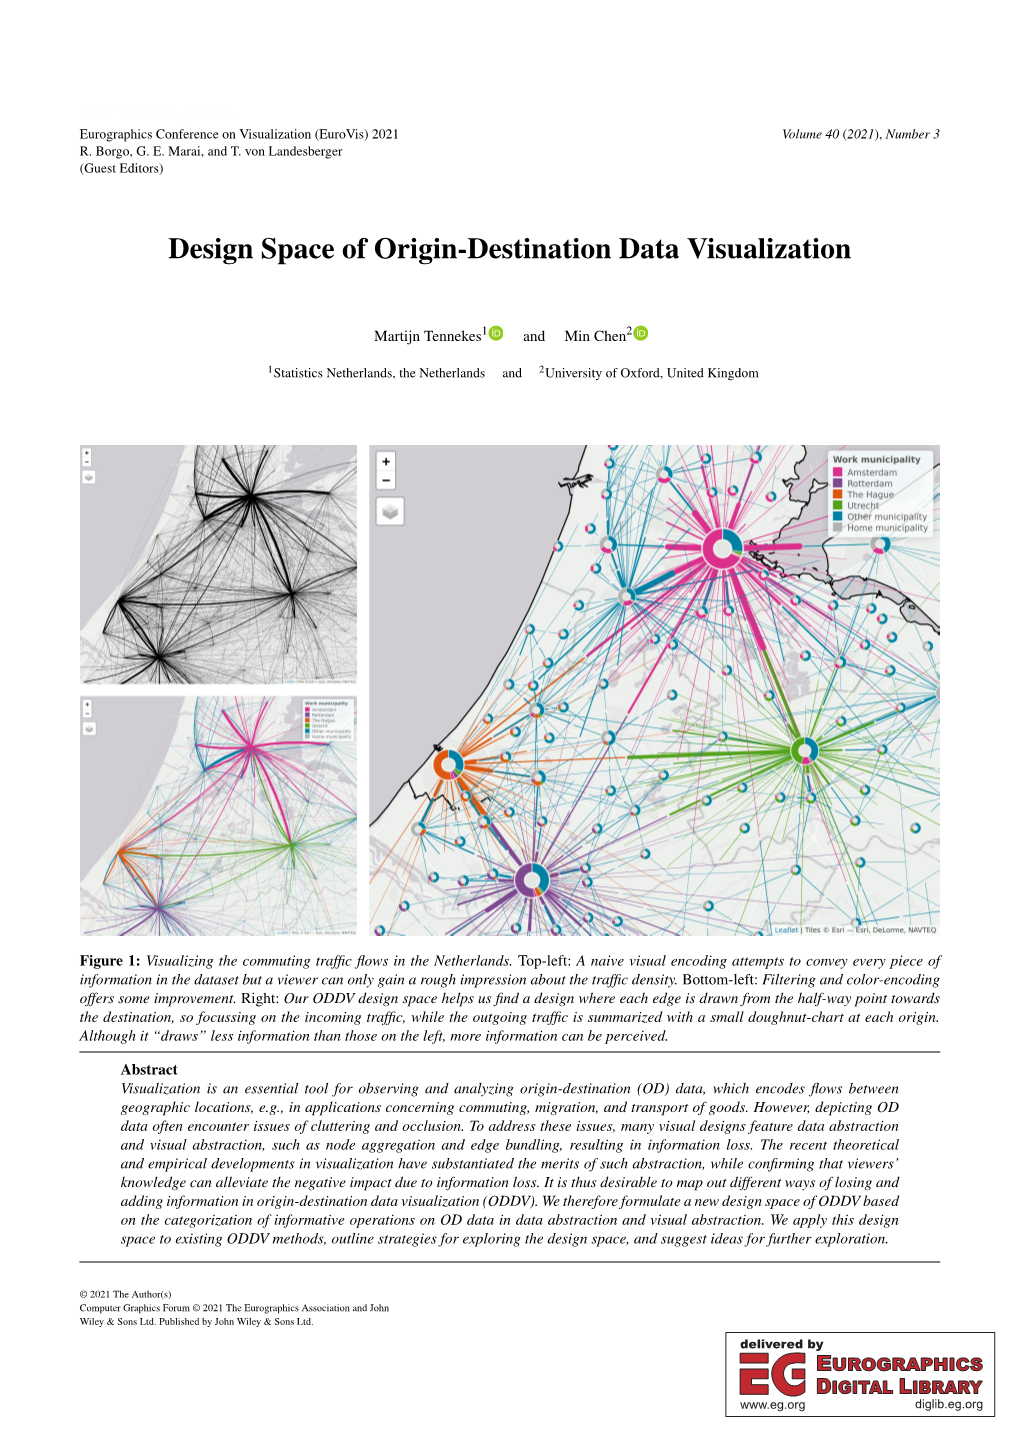 Design Space of Origin-Destination Data Visualization